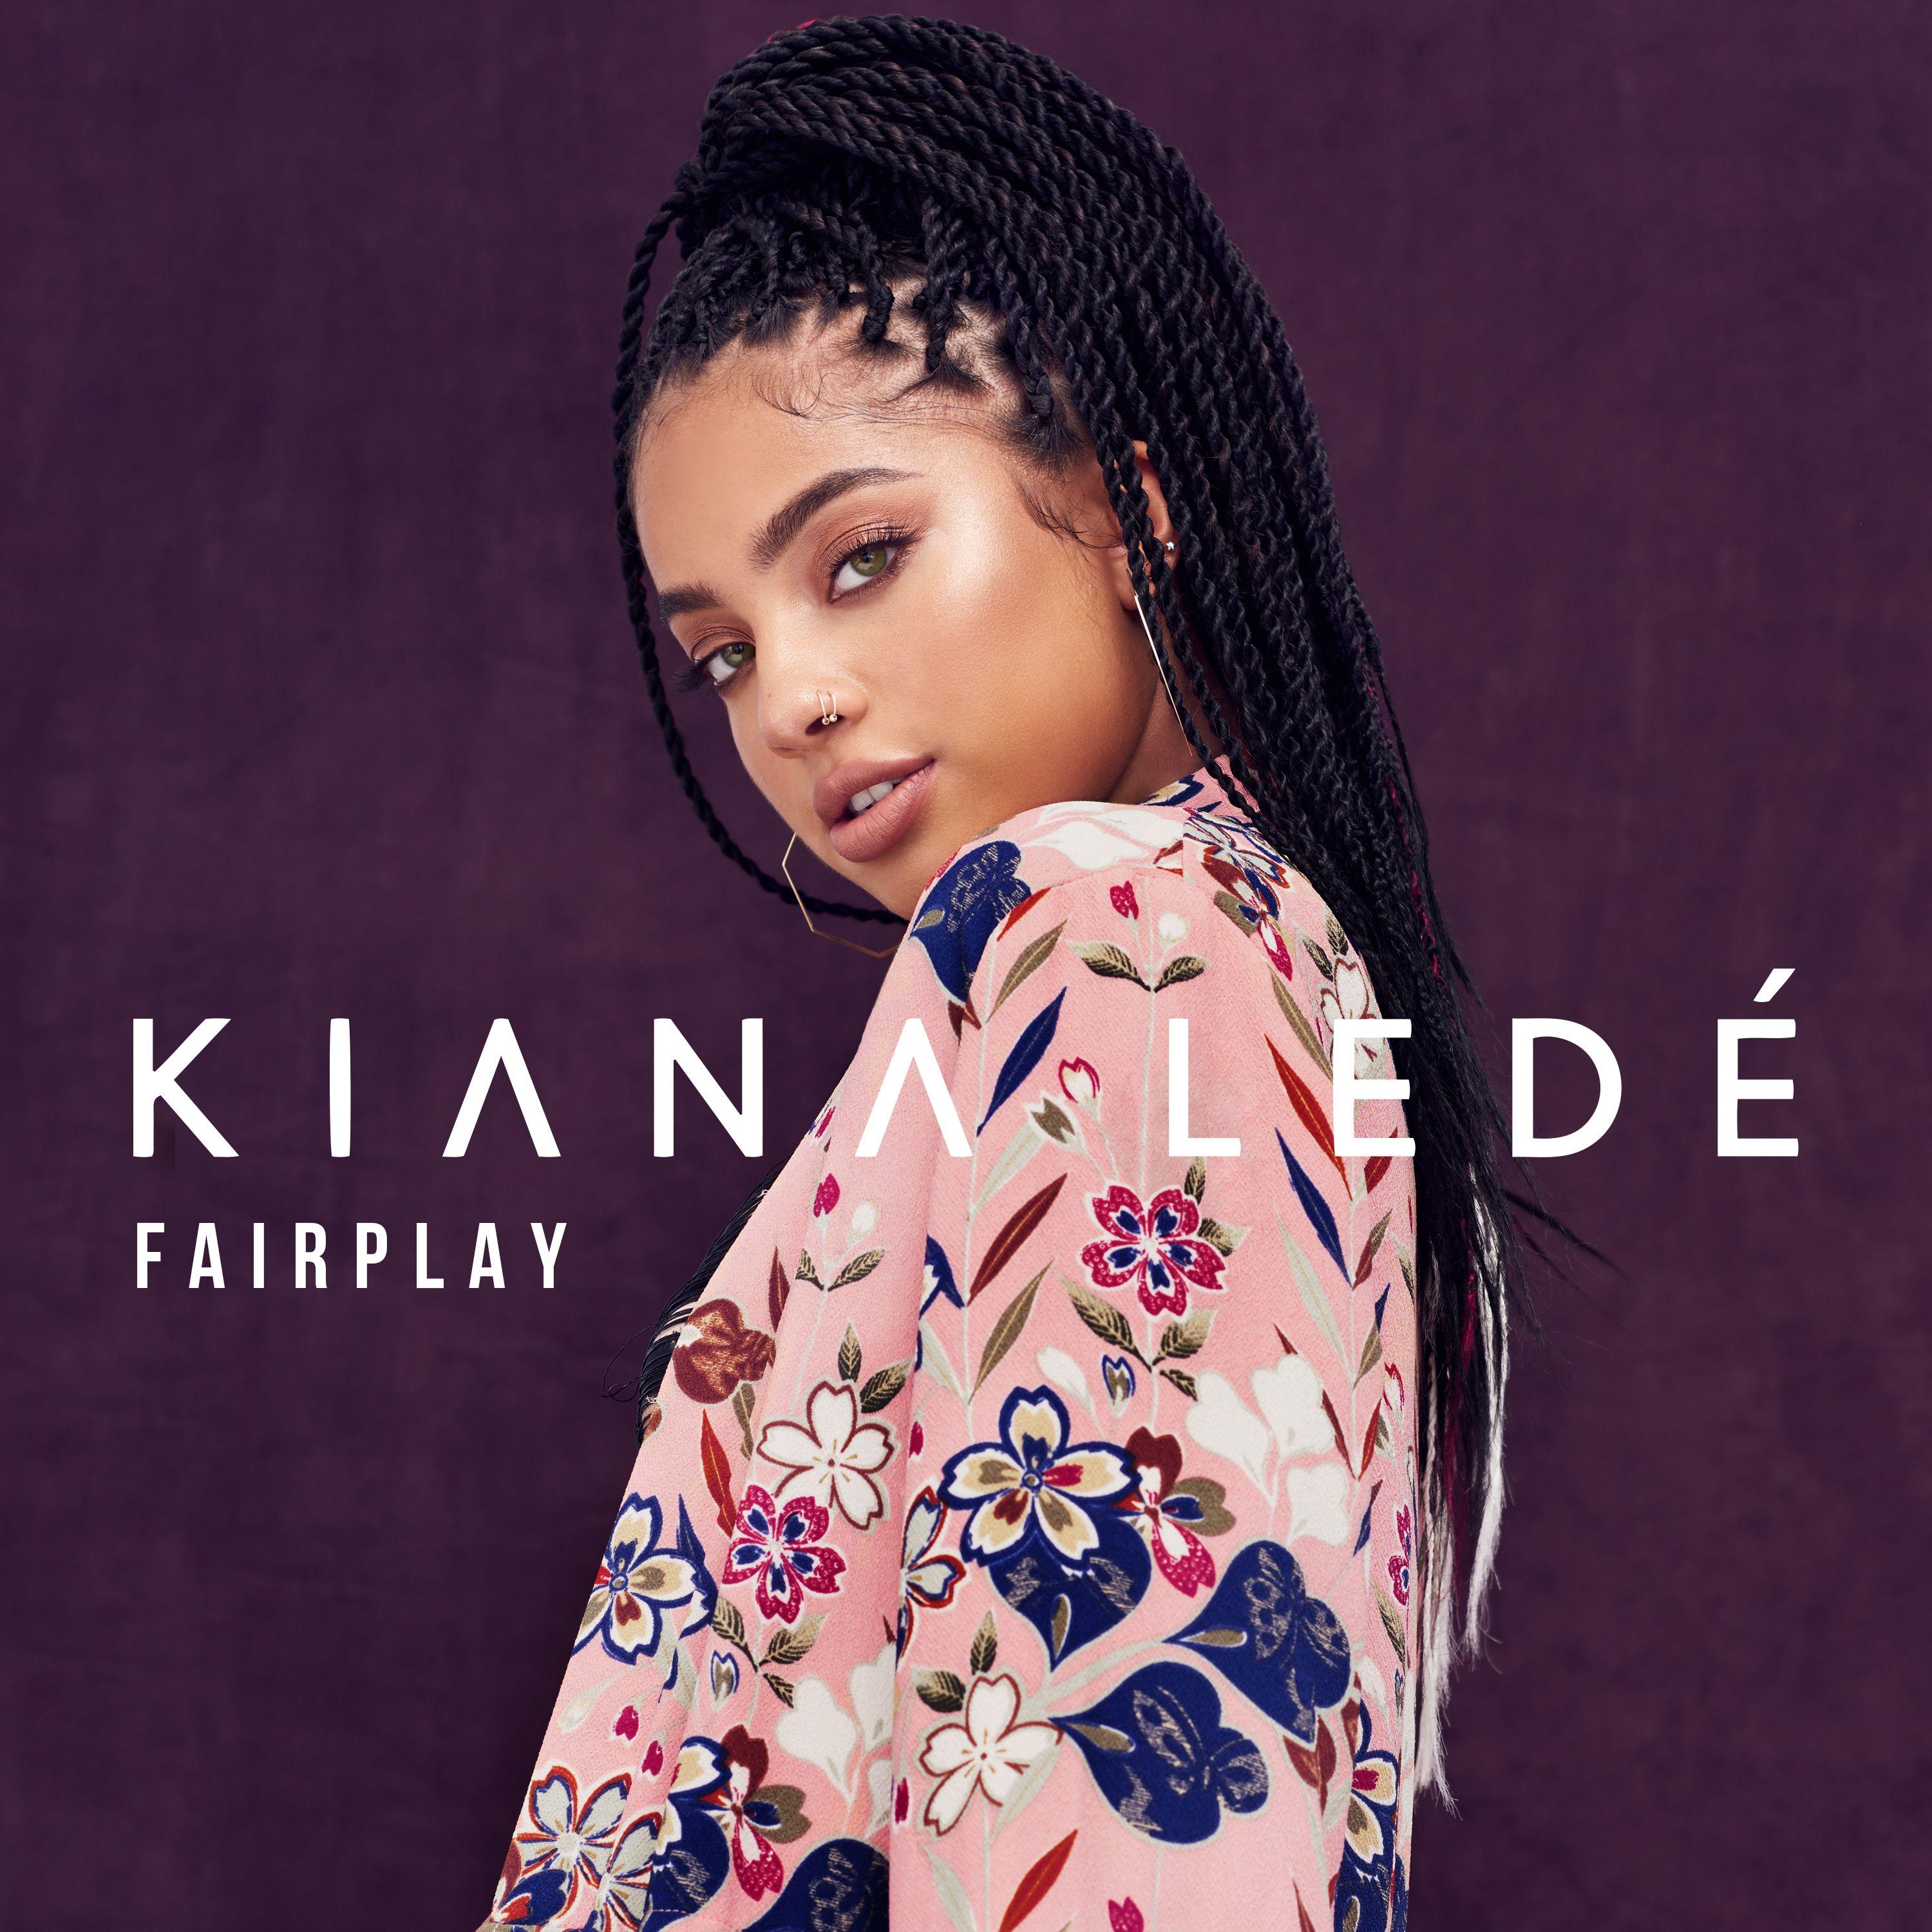 Kiana Ledé “FairPlay”. Republic Album Art. Kiana